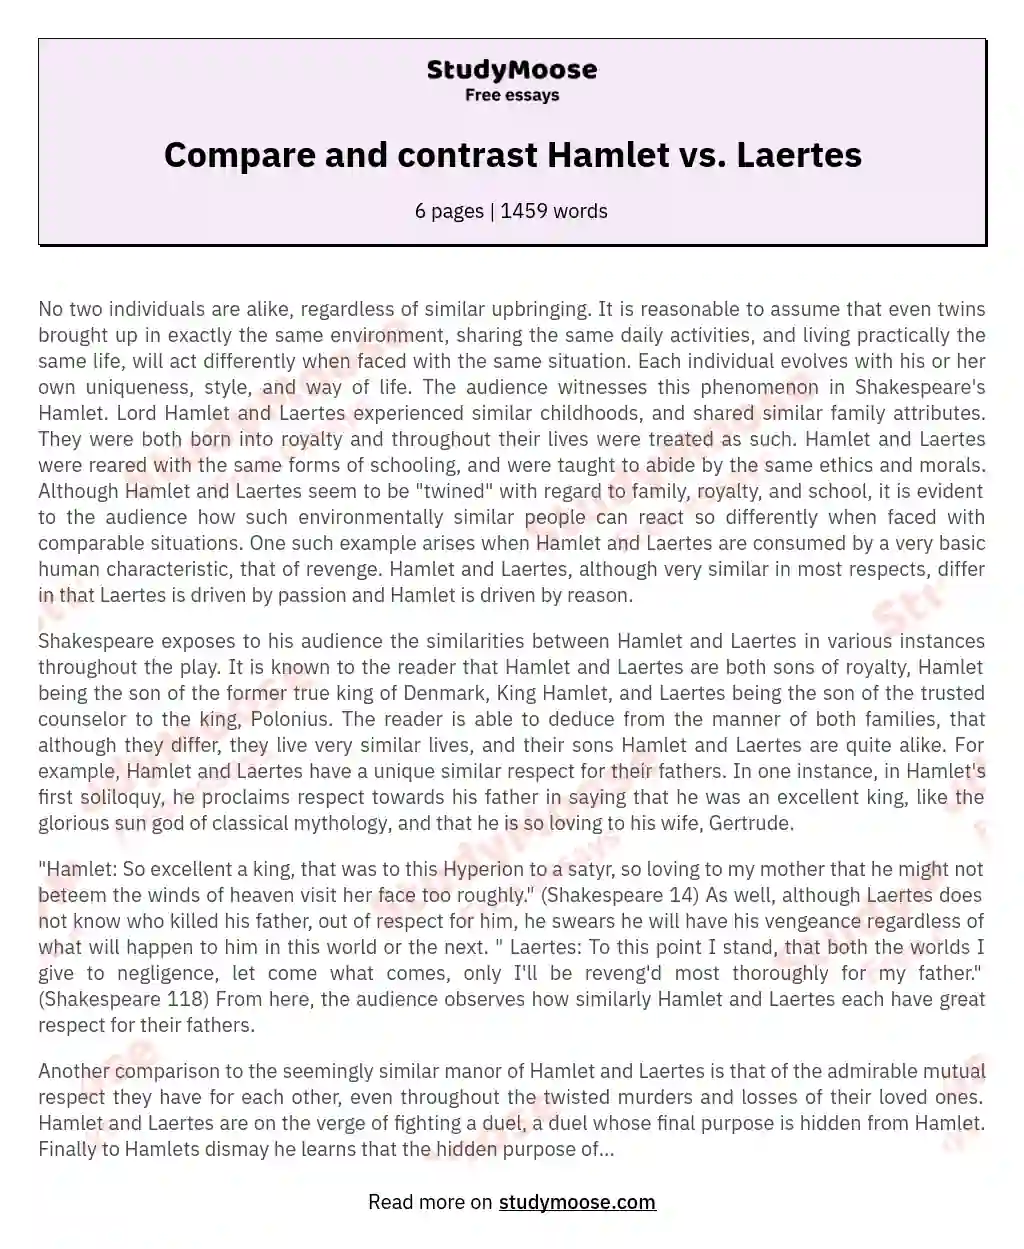 Compare and contrast Hamlet vs. Laertes essay